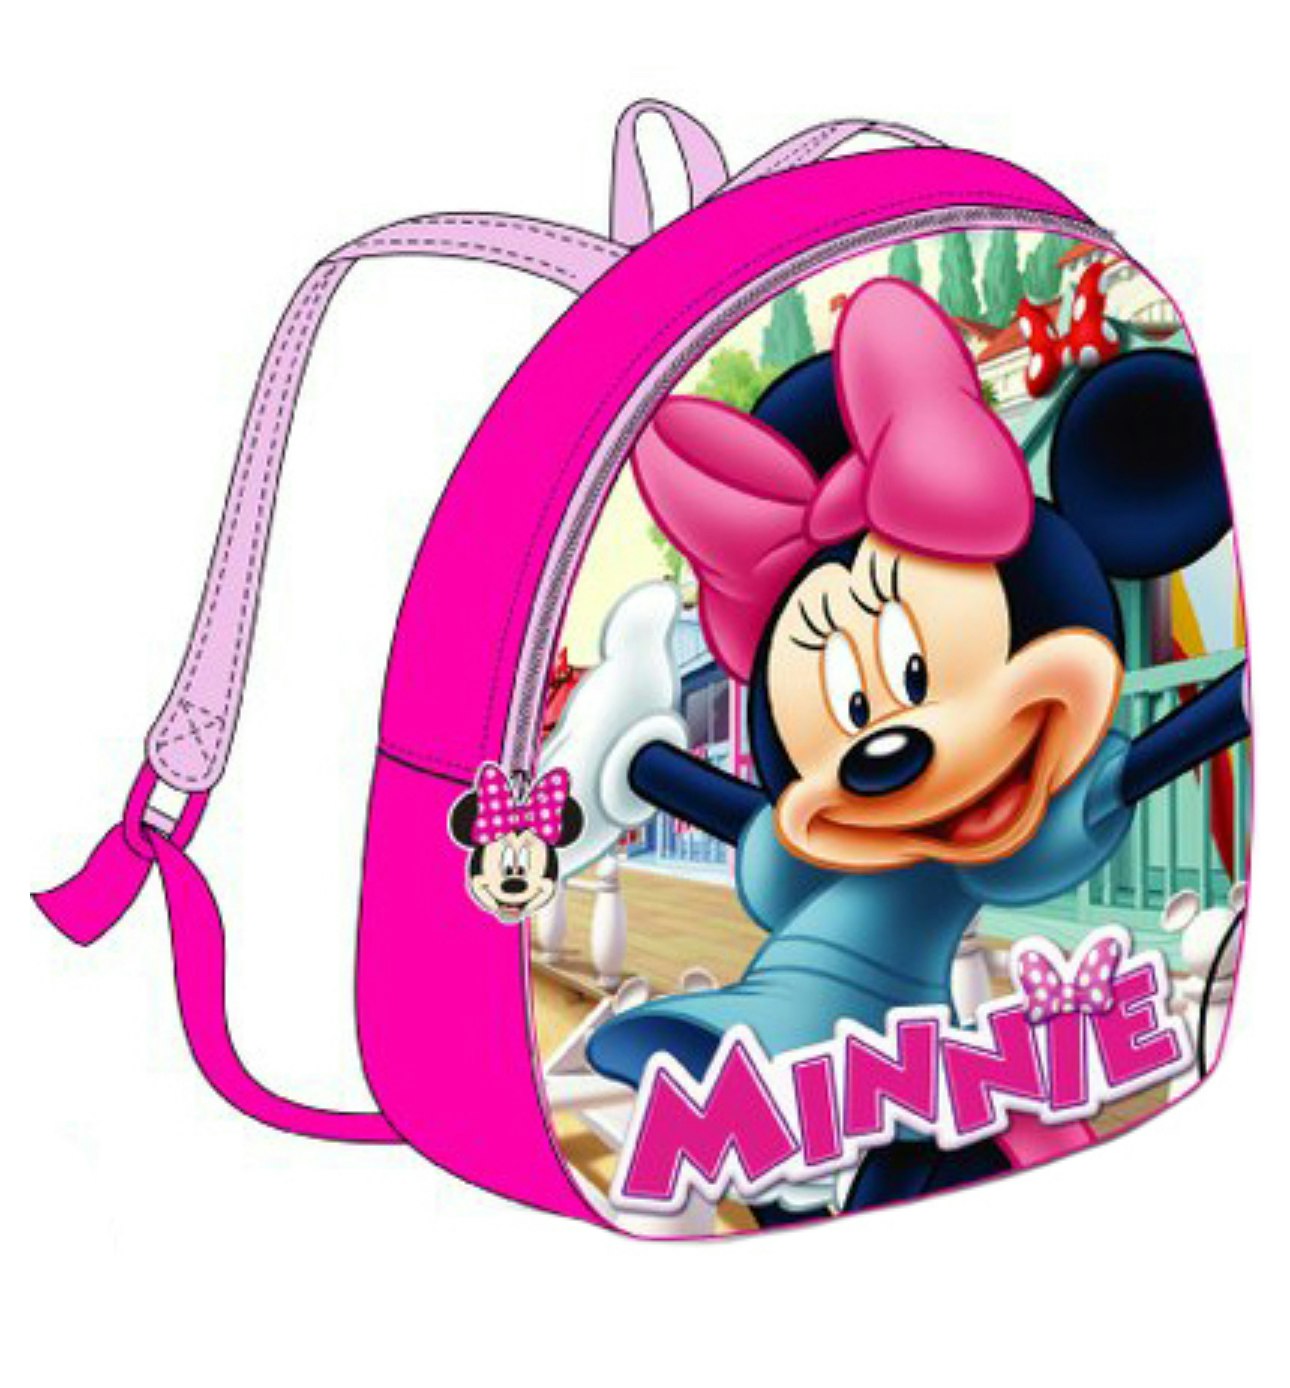 Minnie Mouse Ryggsäck i plysch